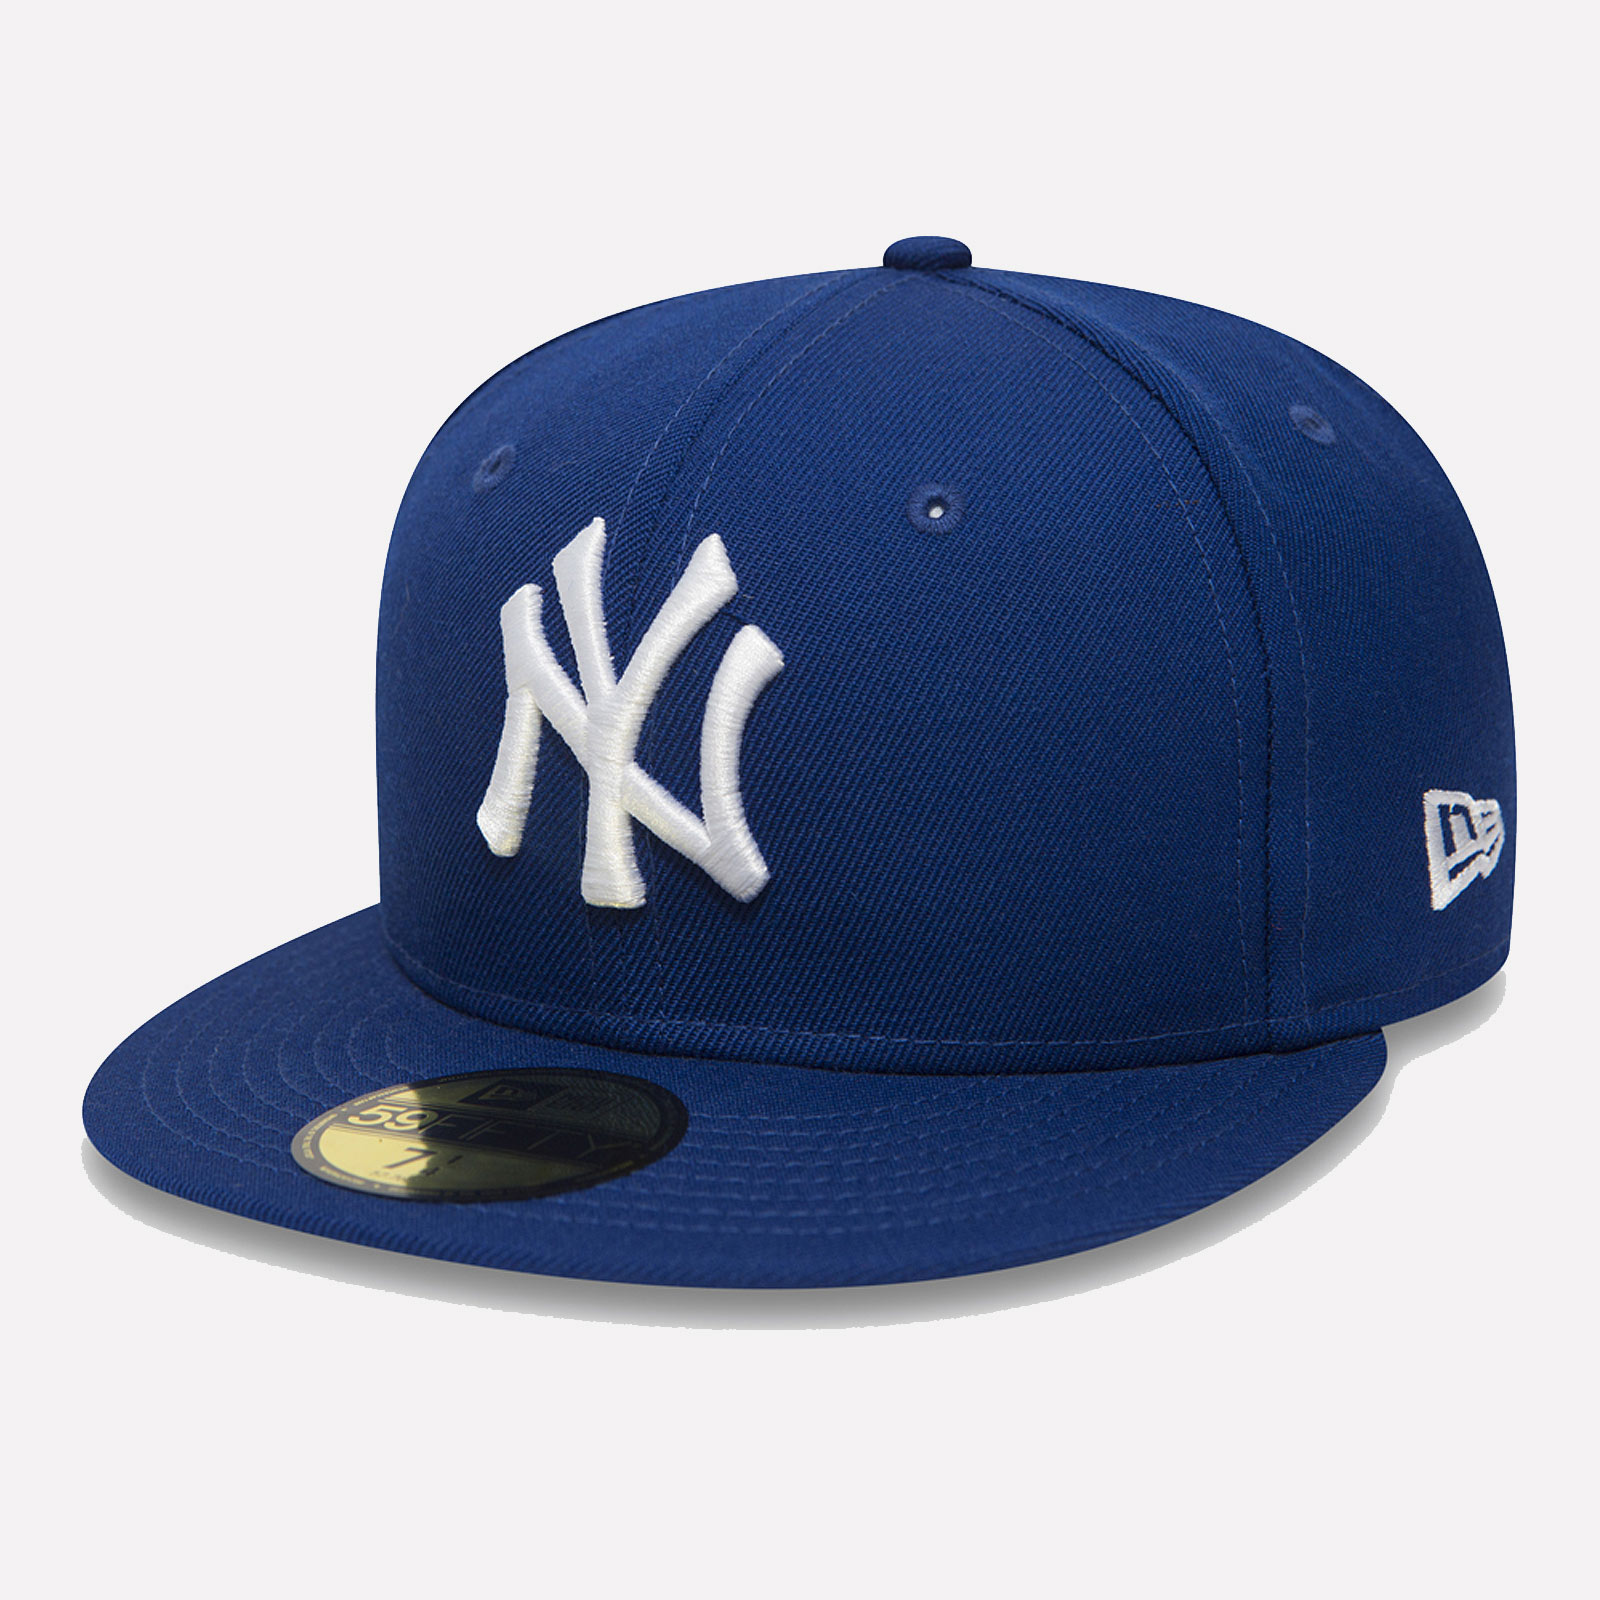 New Era Cap 59fifty Fitted New York Yankees Mlb Baseball Cap Basecap Authentic Ebay